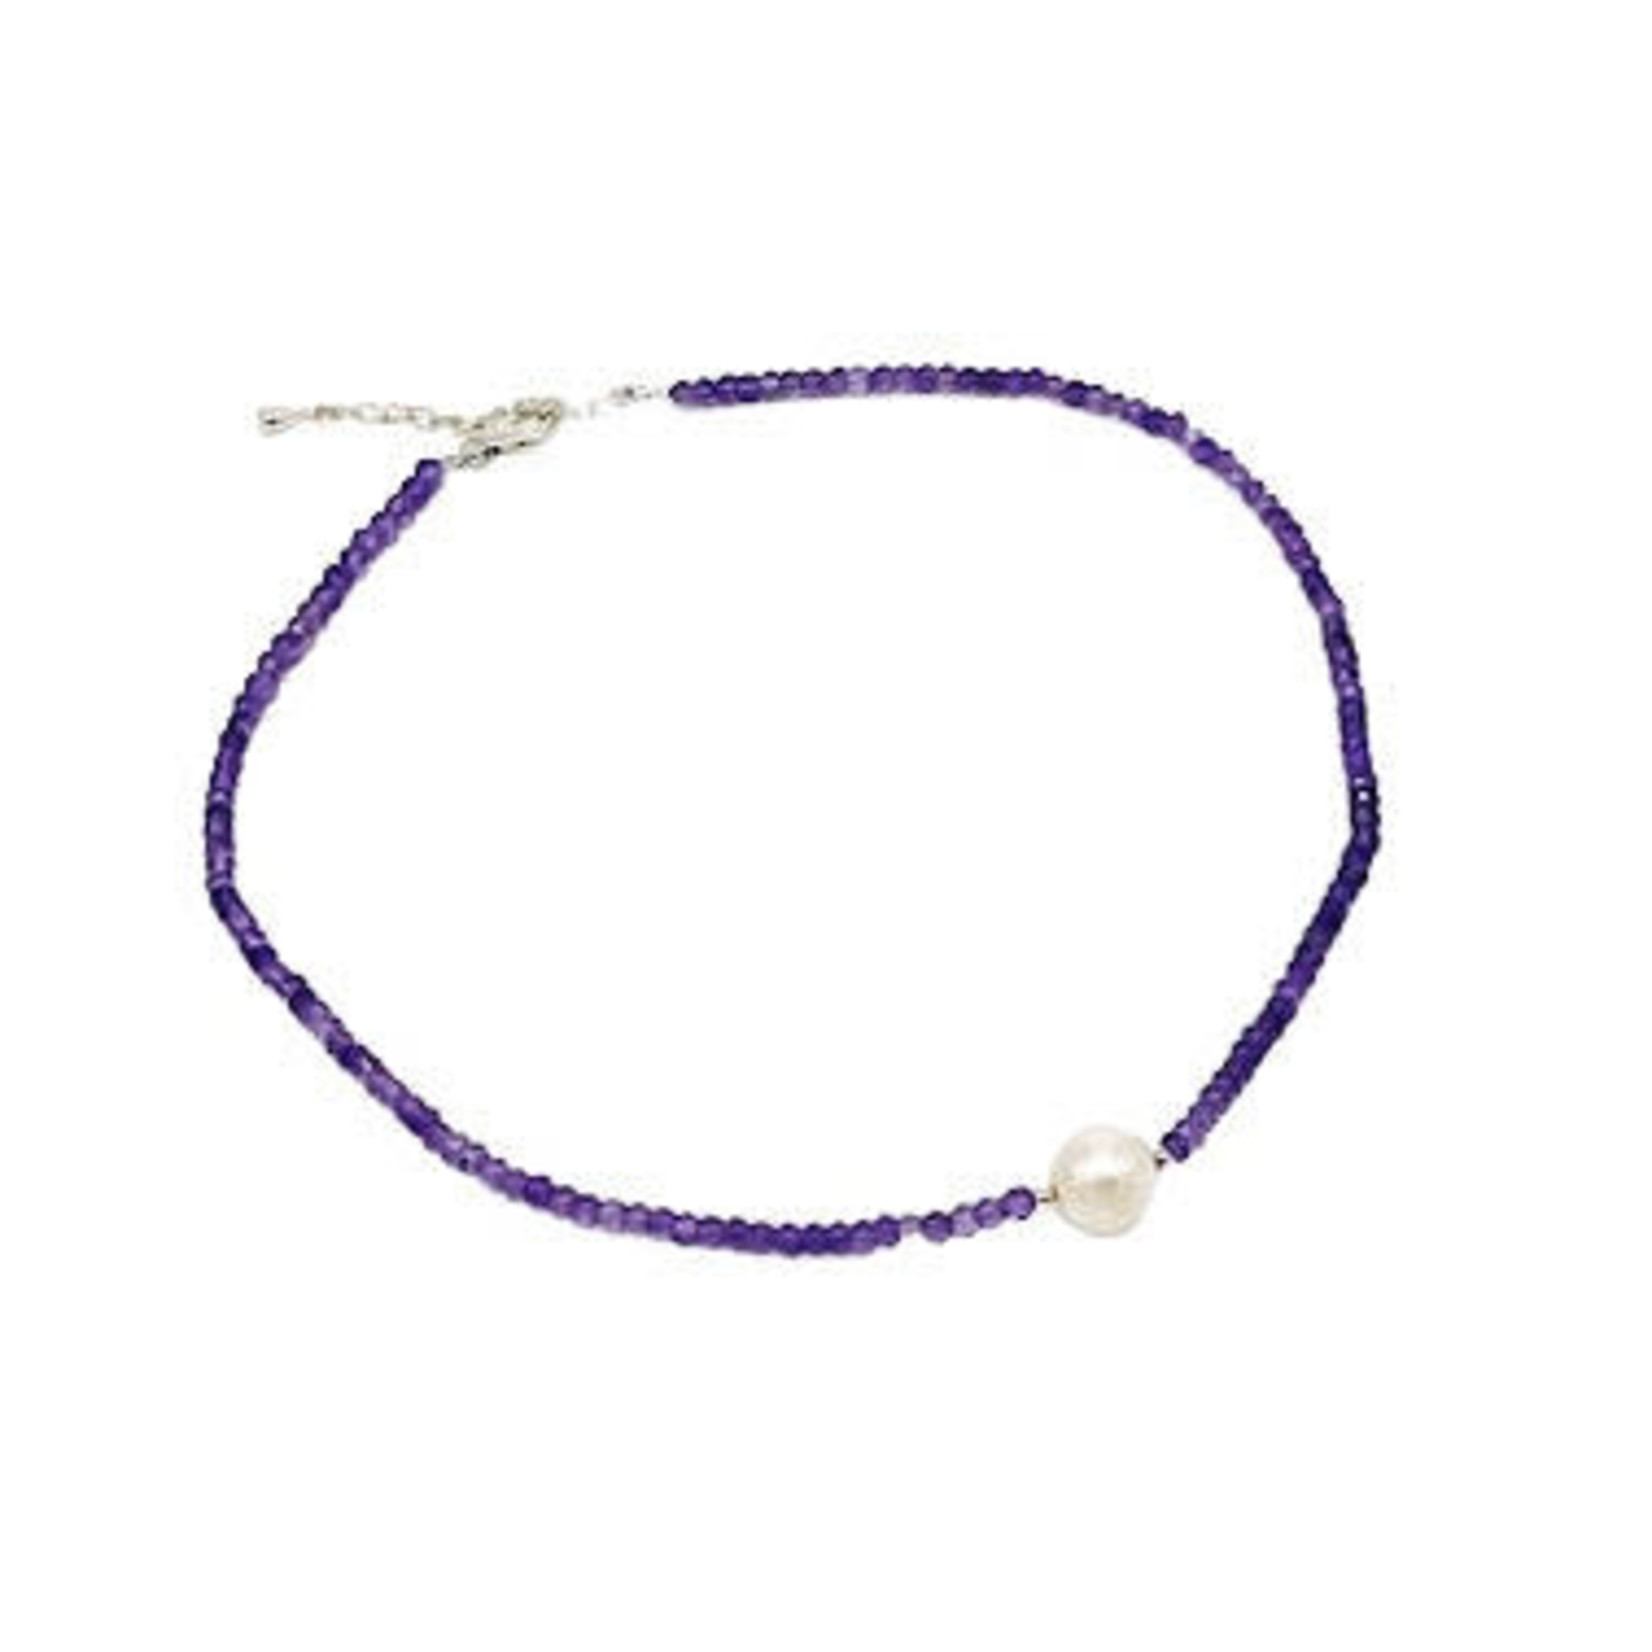 Amethyst White Pearl Adjustable 16-18" 2mm Gemstone Bead Necklace